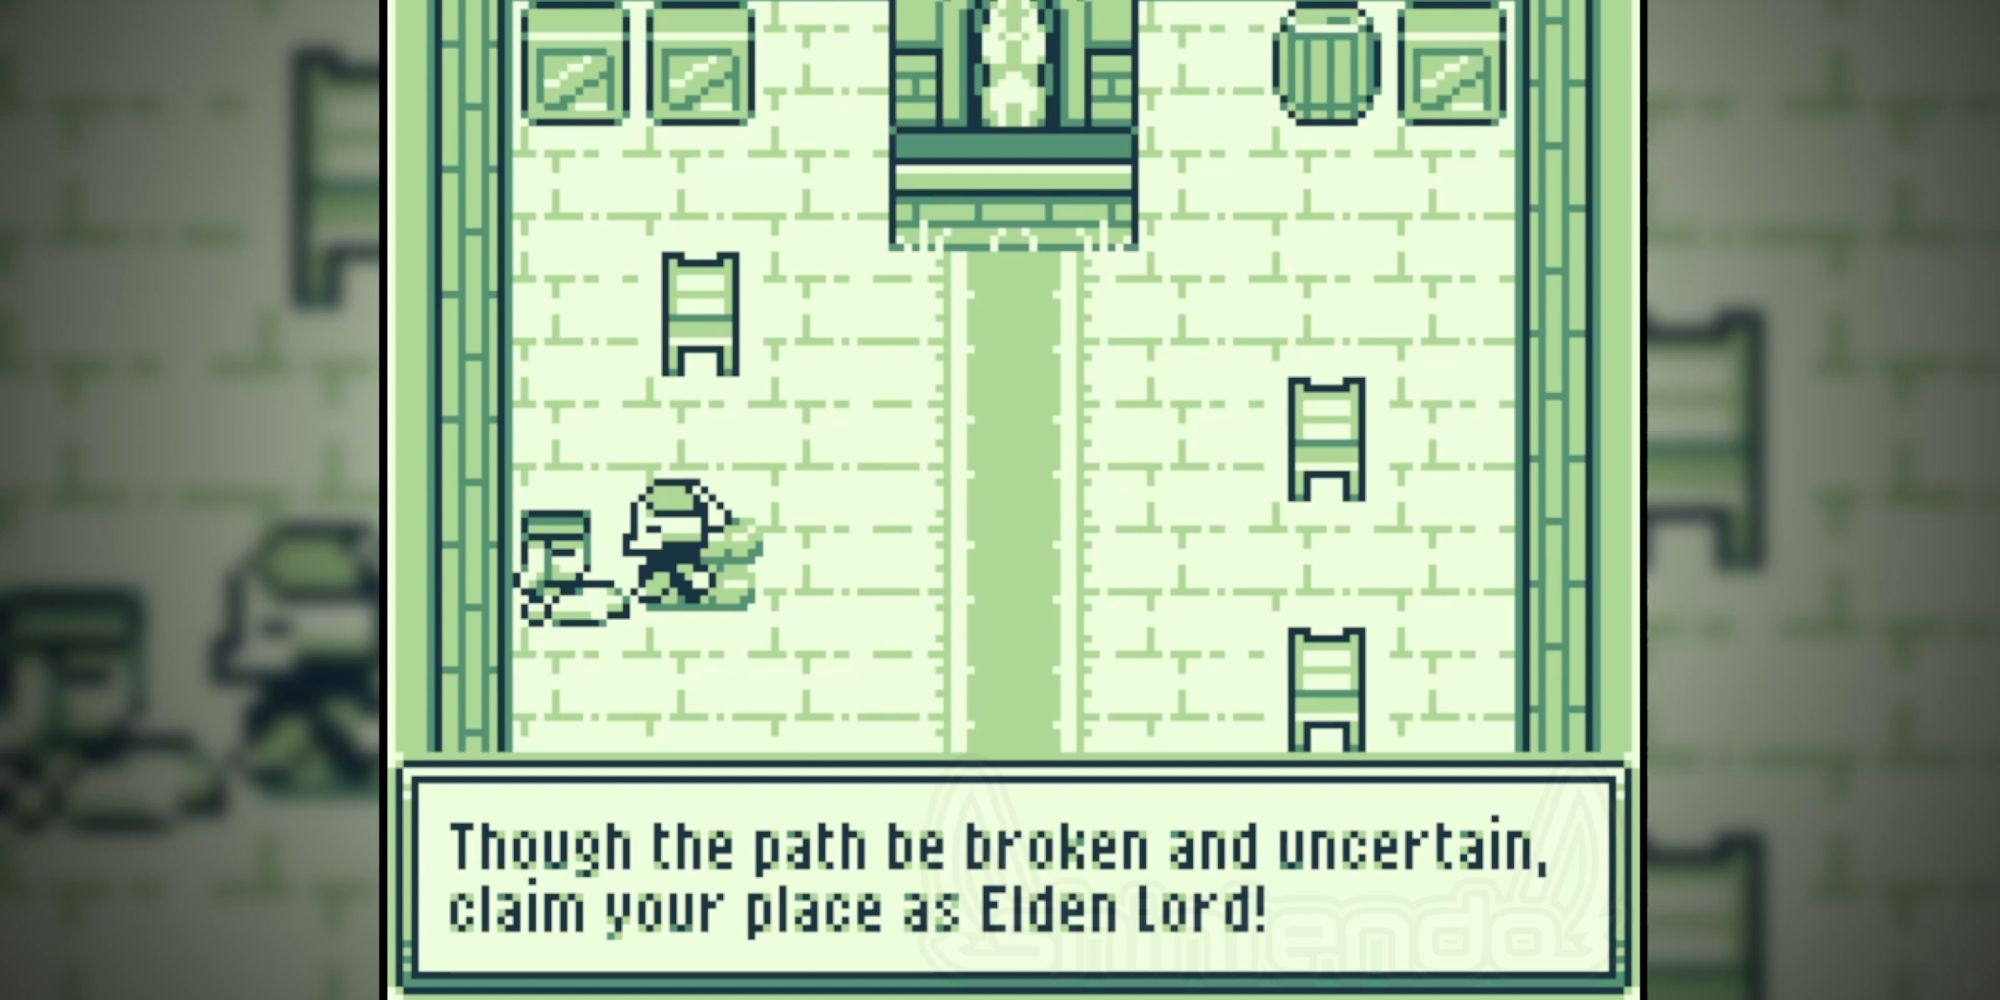 Elden Ring as a GameBoy game.